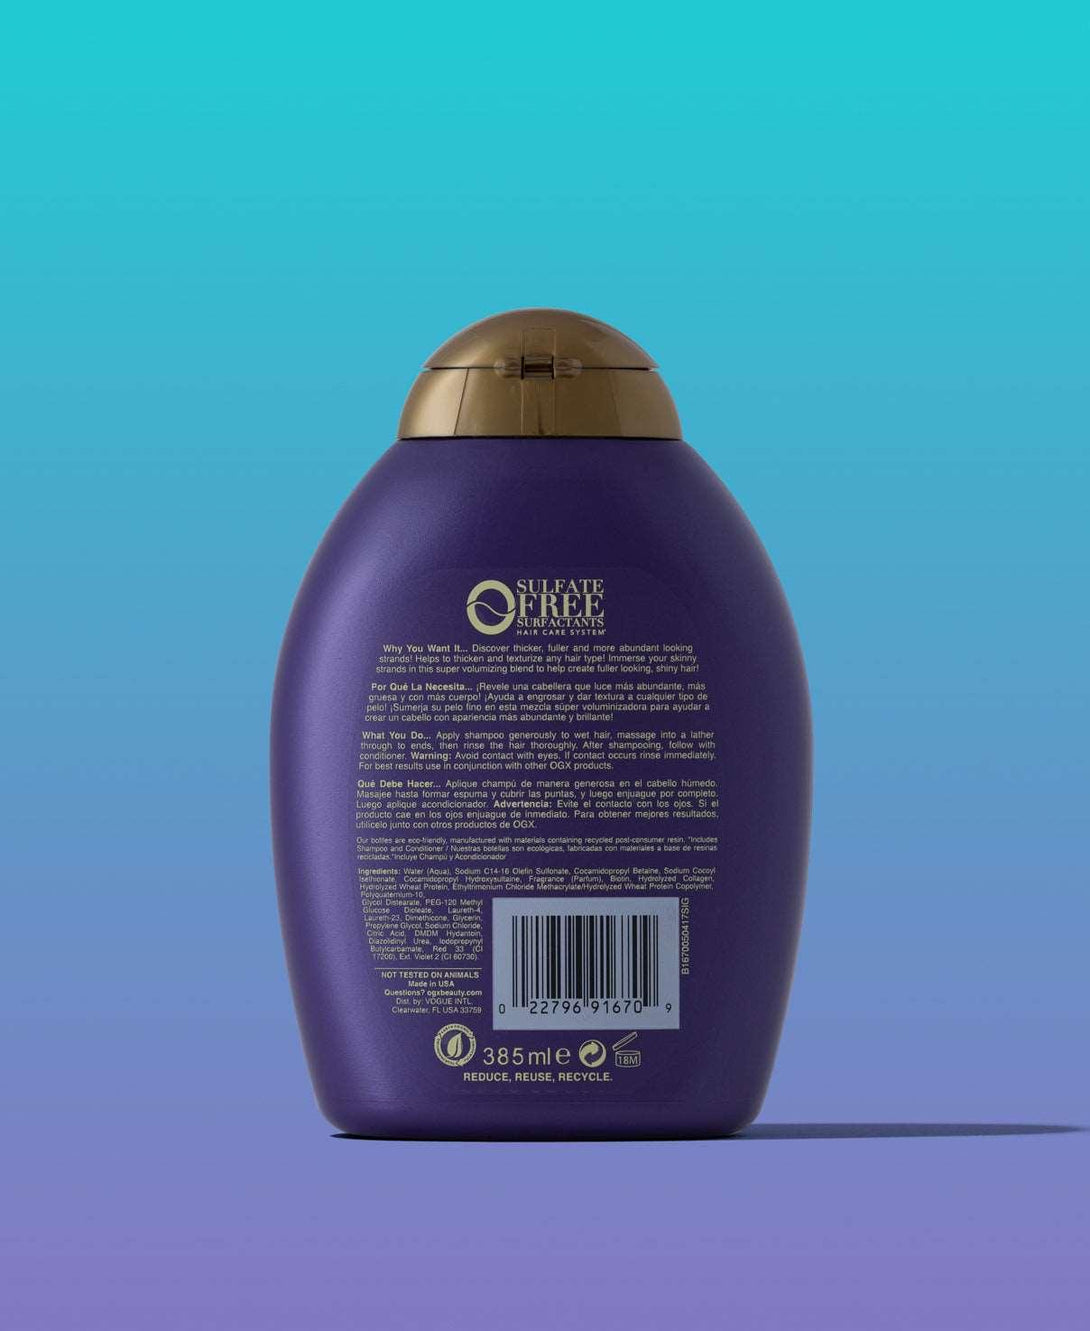 OGX - Thick & Full + Biotin & Collagen Shampoo - 385ML